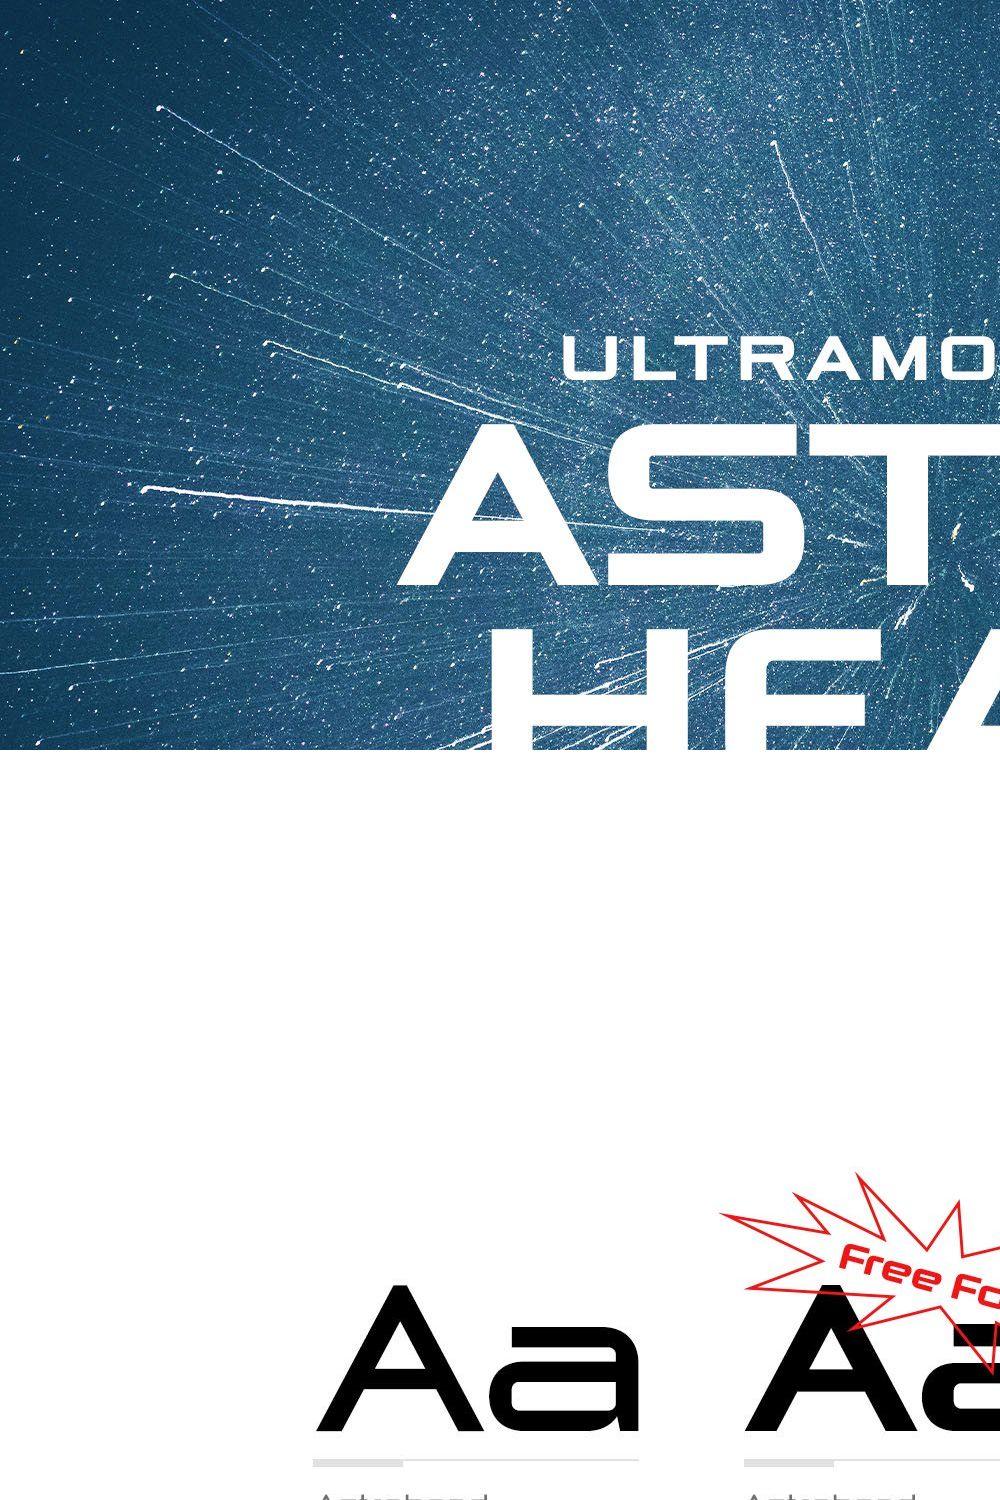 Astrohead geometric sans serif typef pinterest preview image.